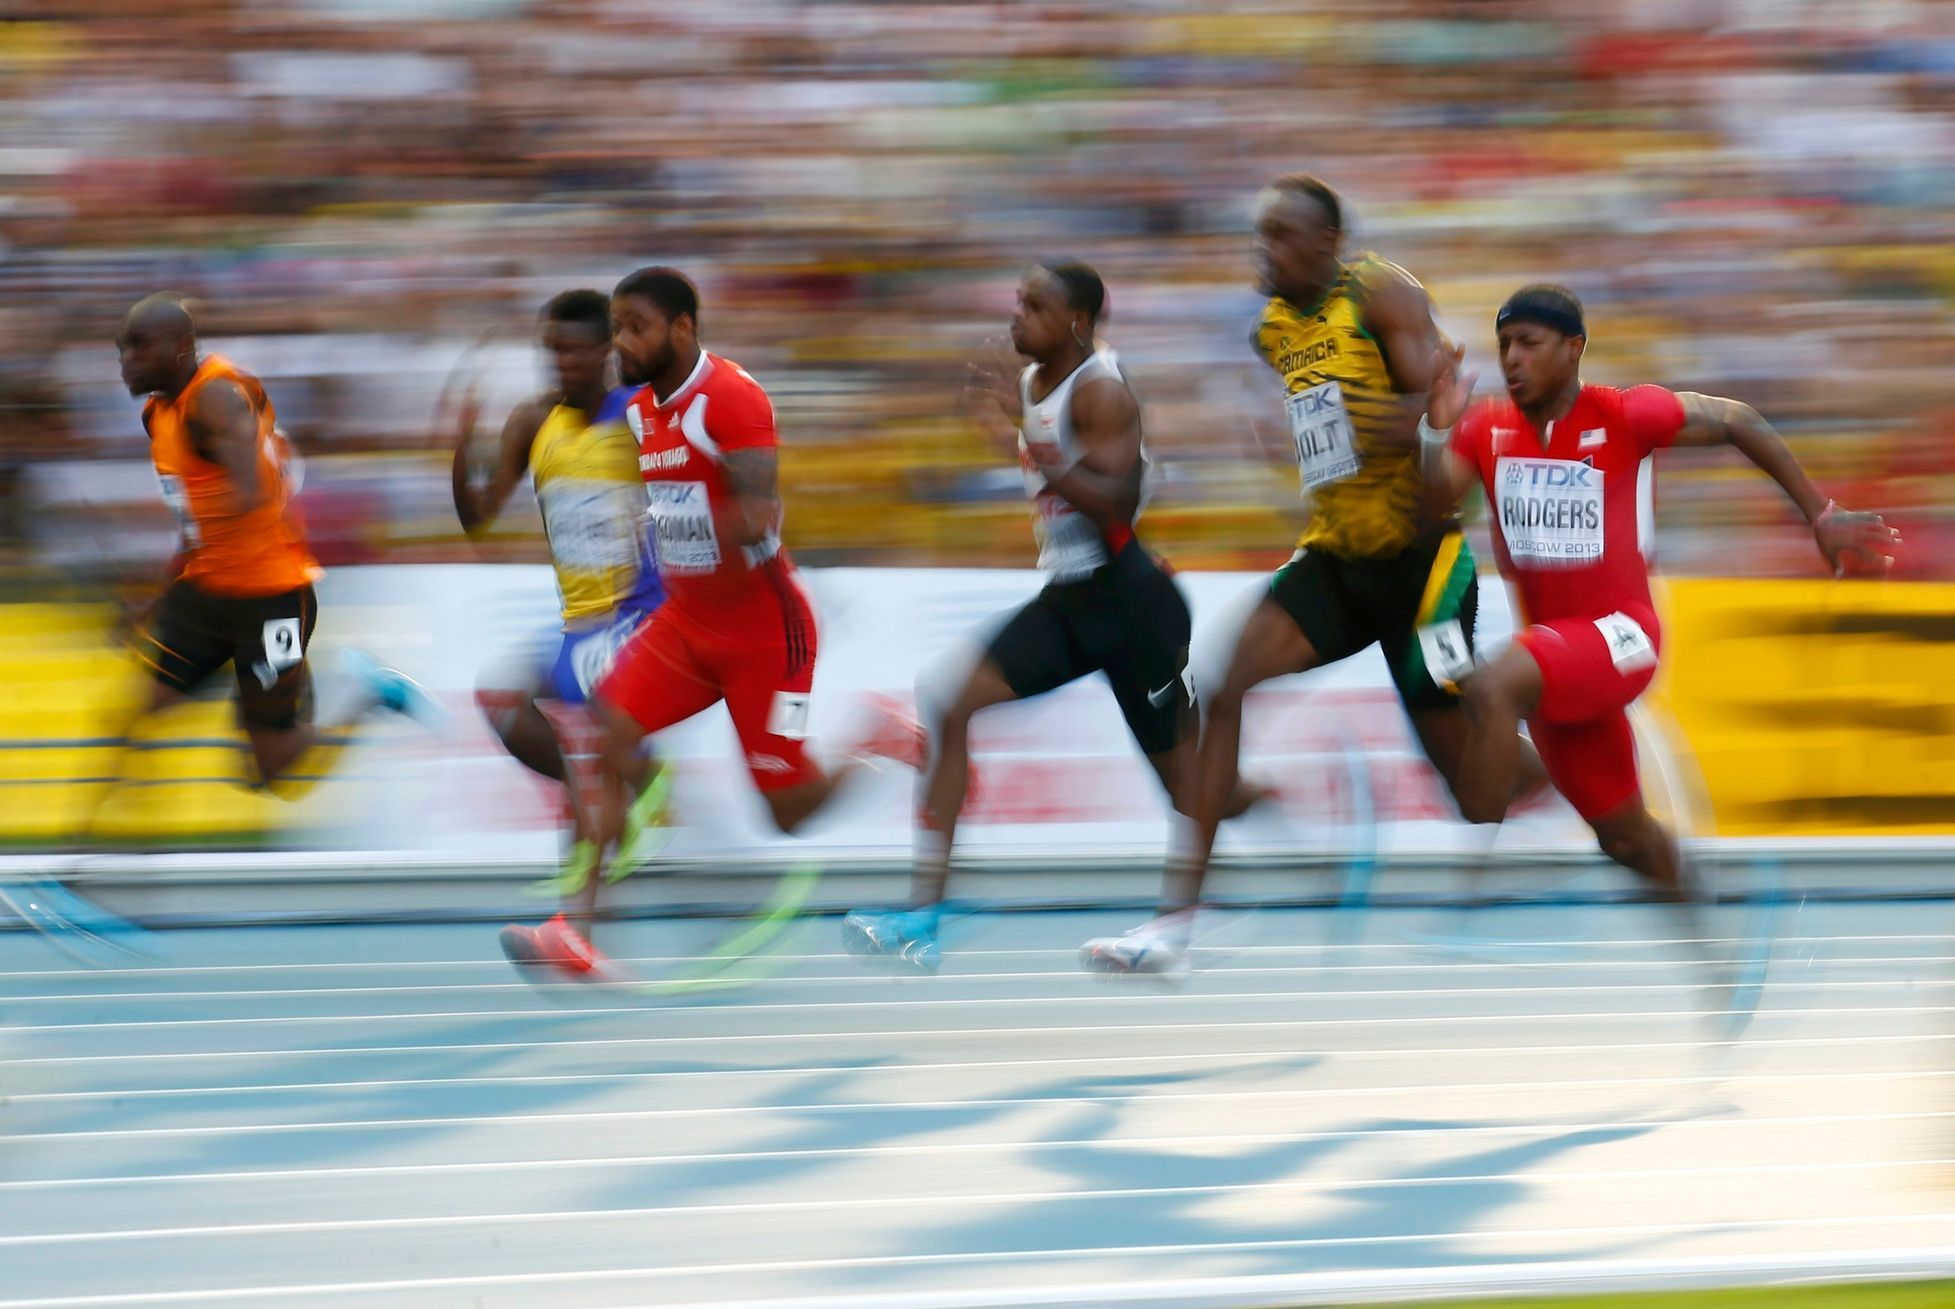 MS v atletice 2013, 100 m - semifinále: Usain Bolt (druhý zprava) a Mike Rodgers (vpravo)